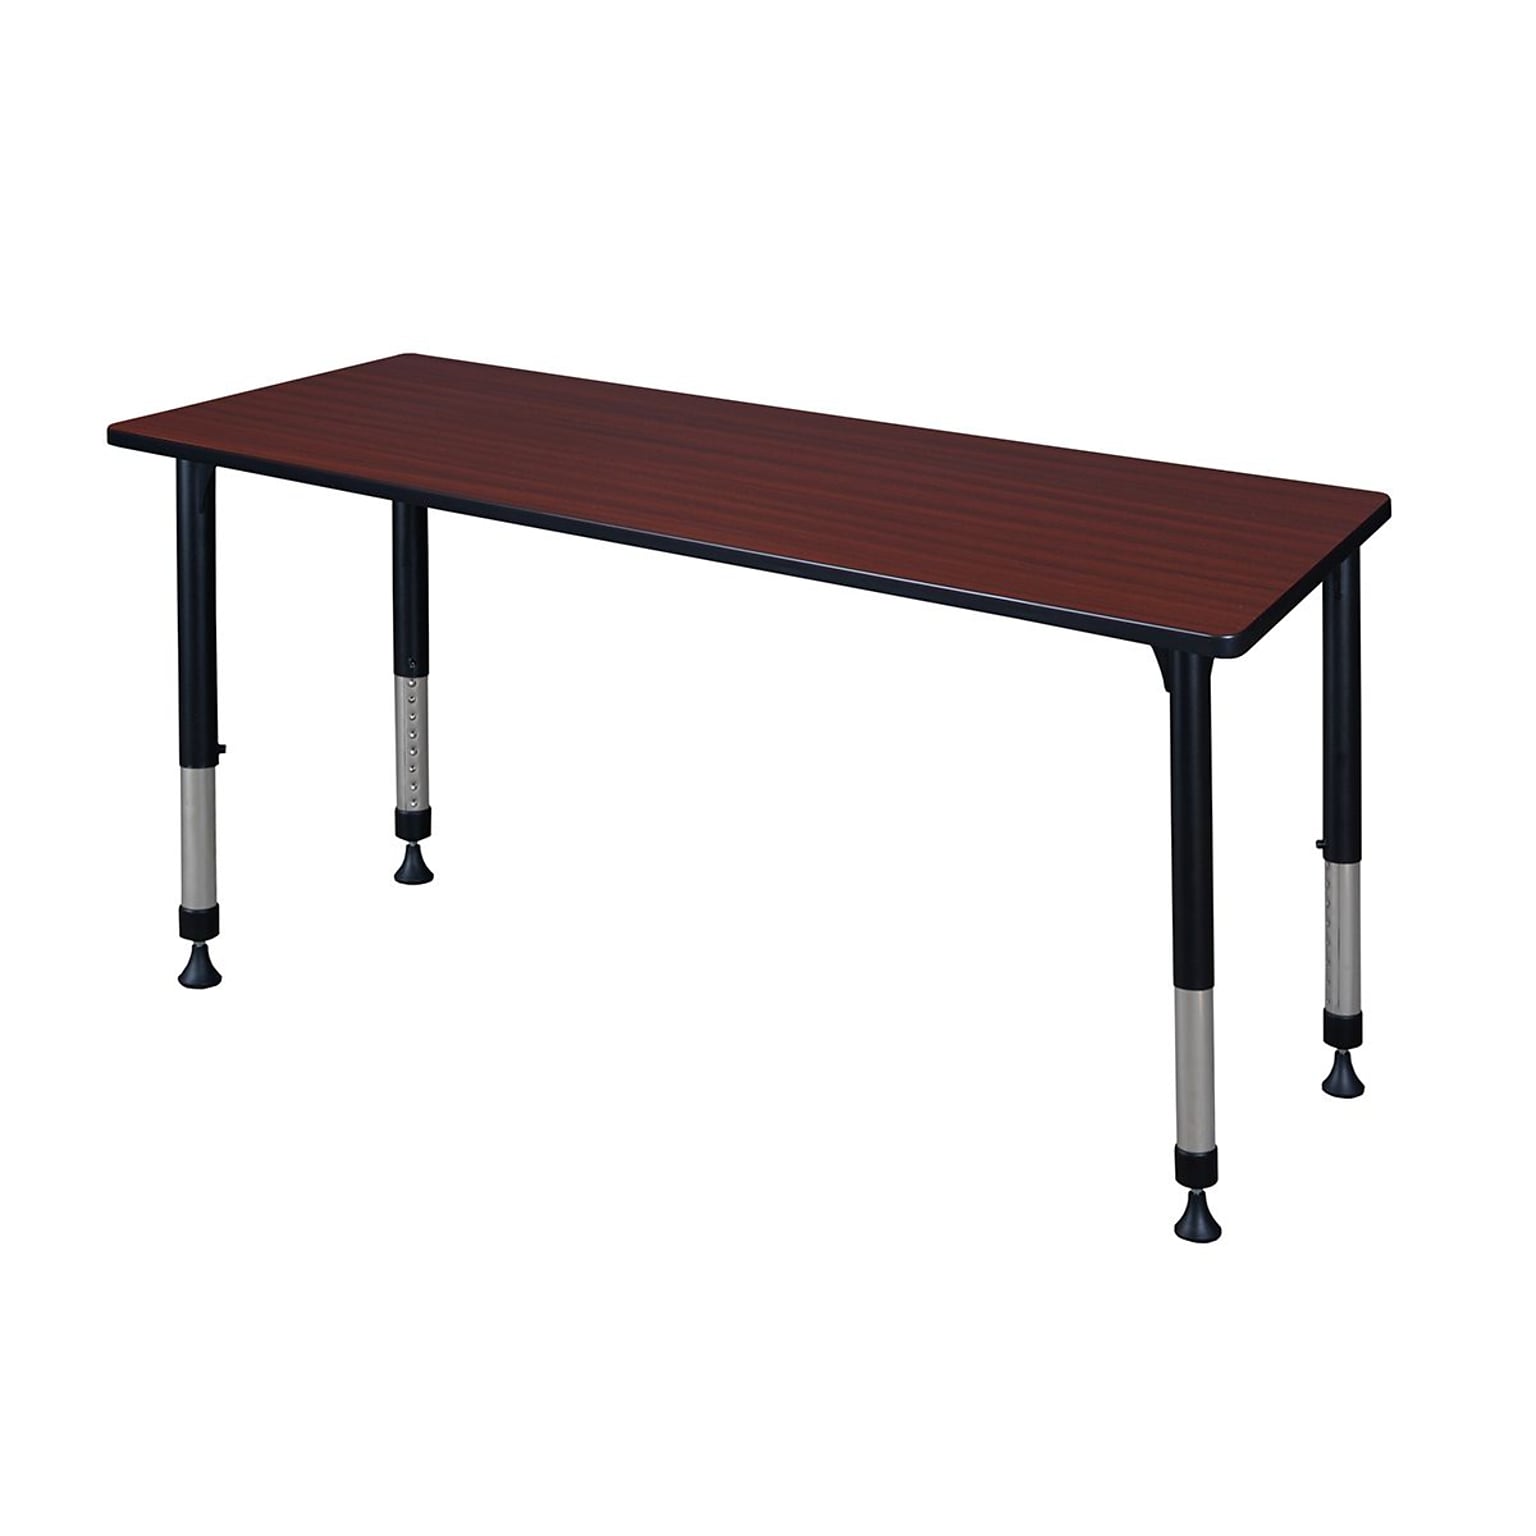 Regency Kee 72L Rectangular Laminated Wood Height Adjustable Classroom Table, Mahogany (MT7224MHAPBK)